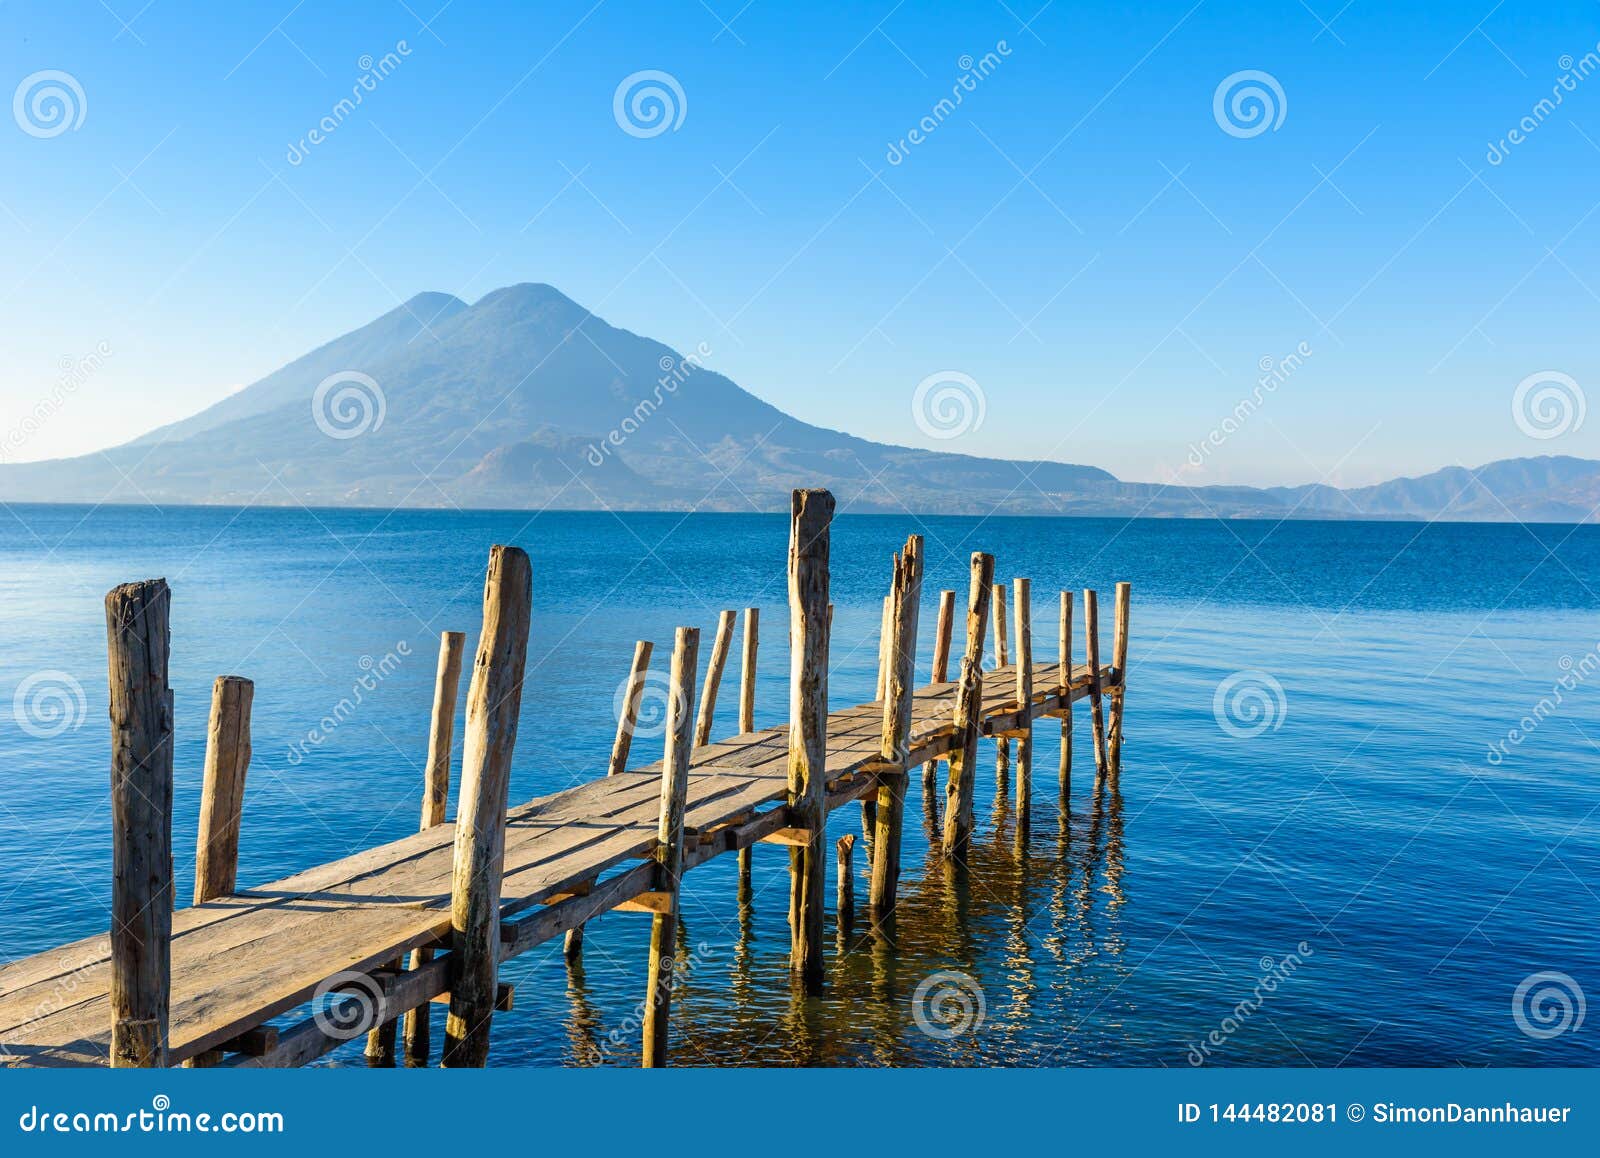 wooden pier at lake atitlan on the beach in panajachel, guatemala. with beautiful landscape scenery of volcanoes toliman, atitlan